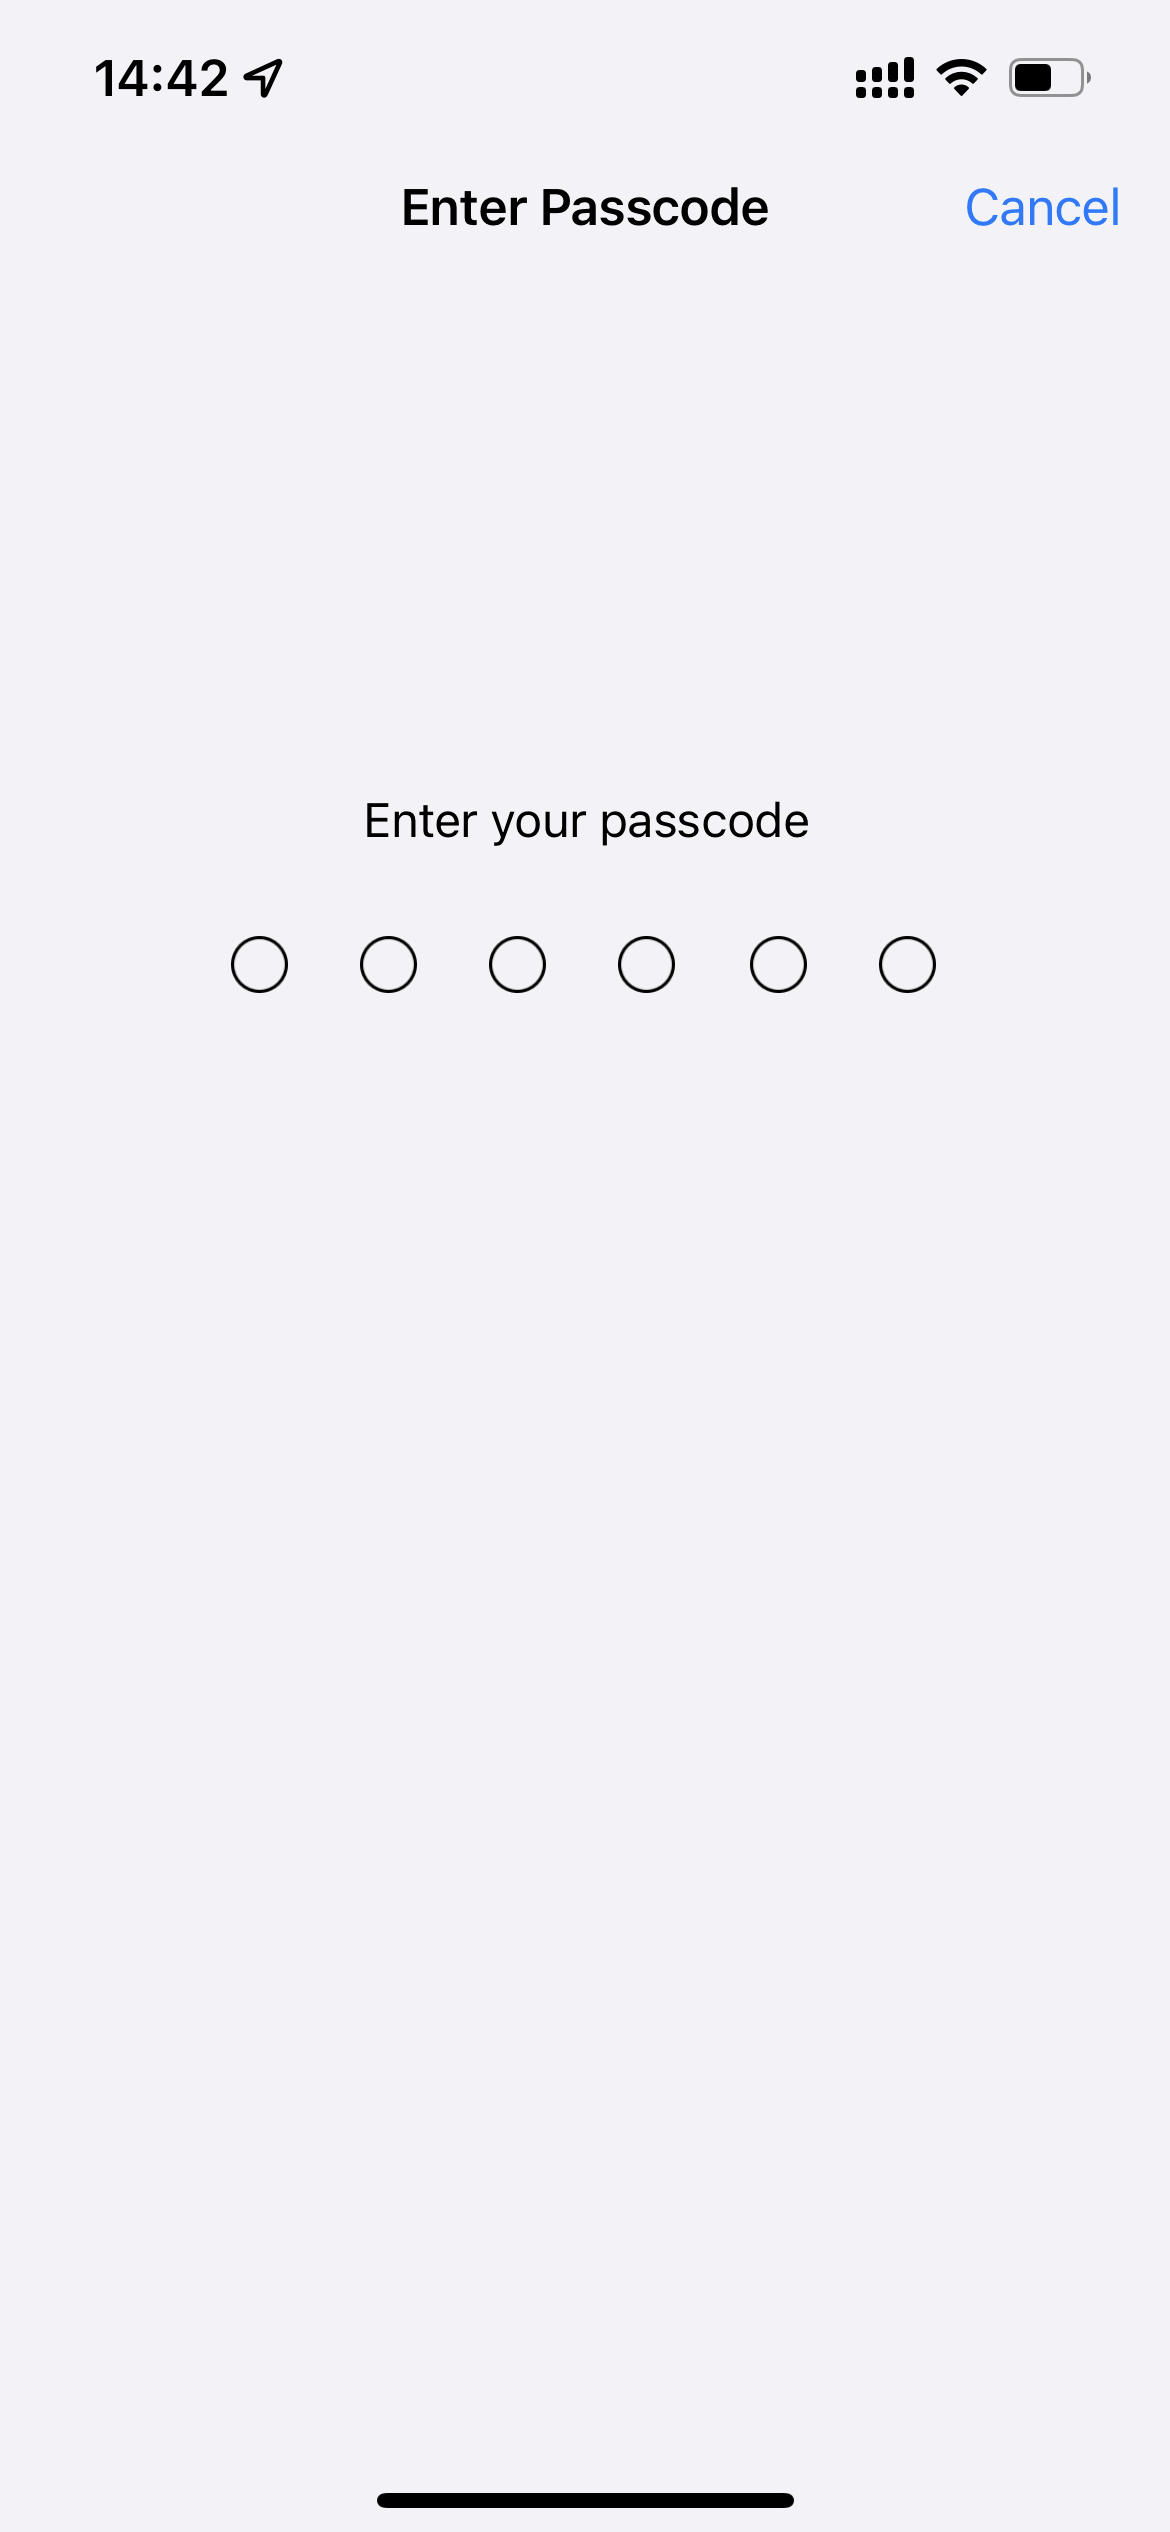 4. Enter Passcode